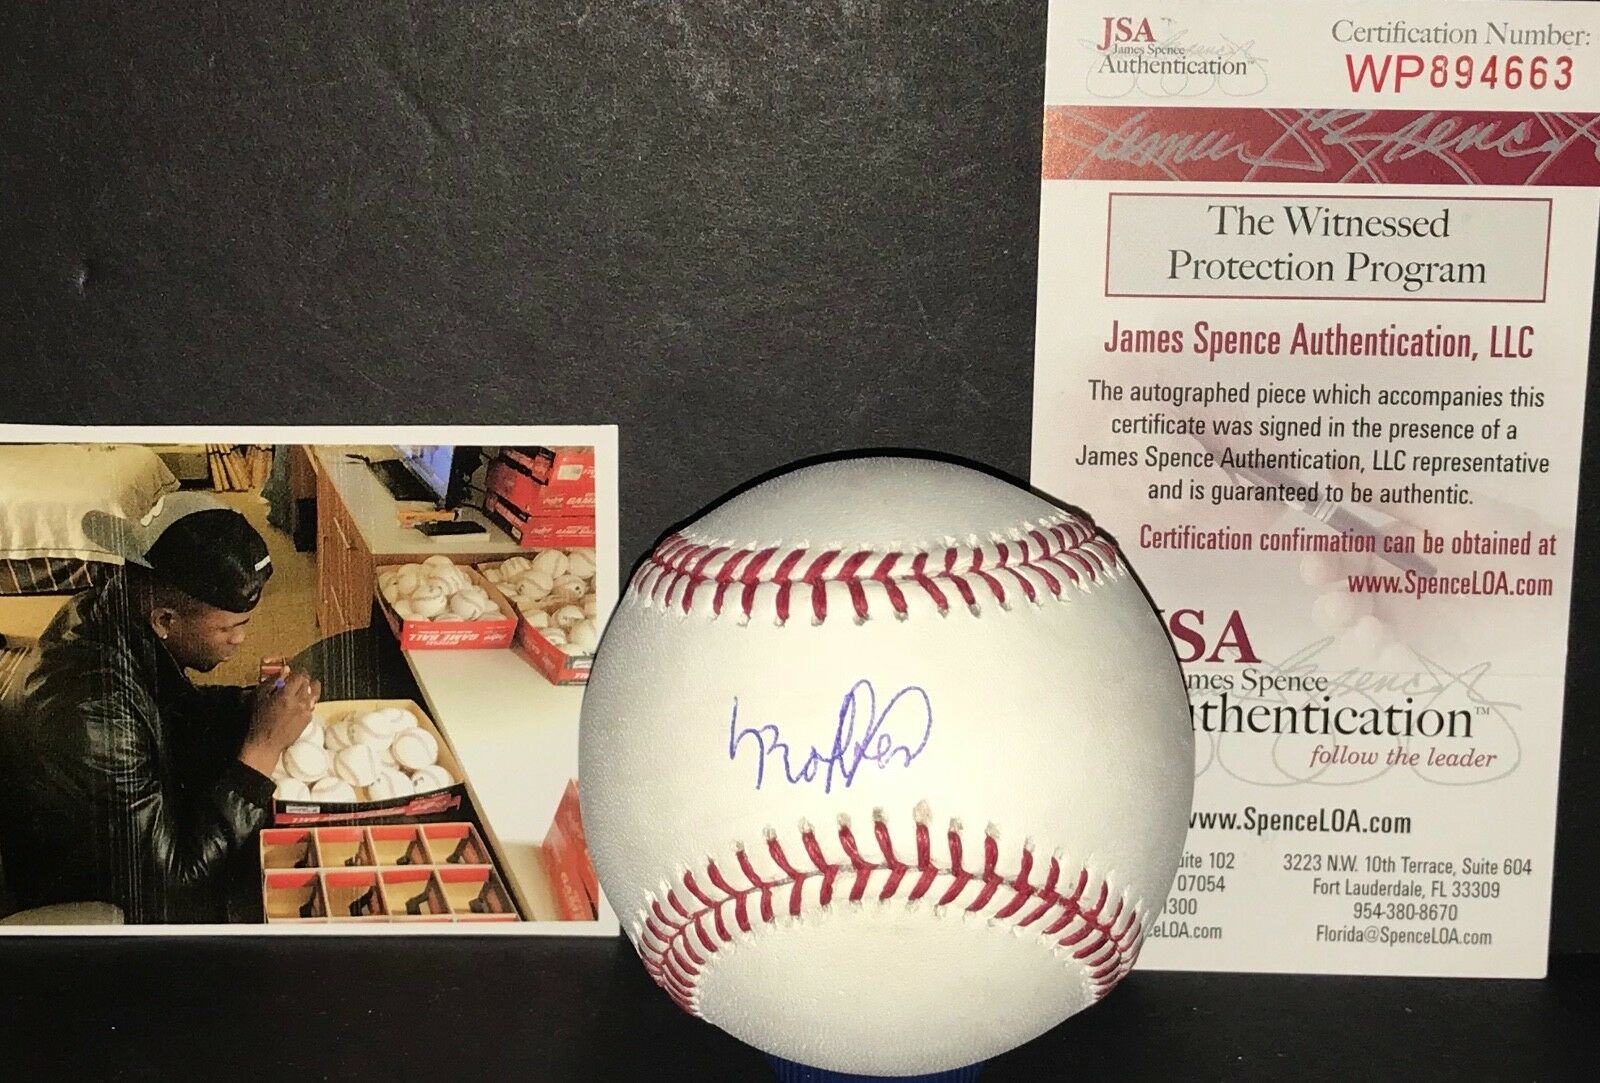 Luis Robert Chicago White Sox Autographed Signed Baseball JSA WITNESS COA Full Signature